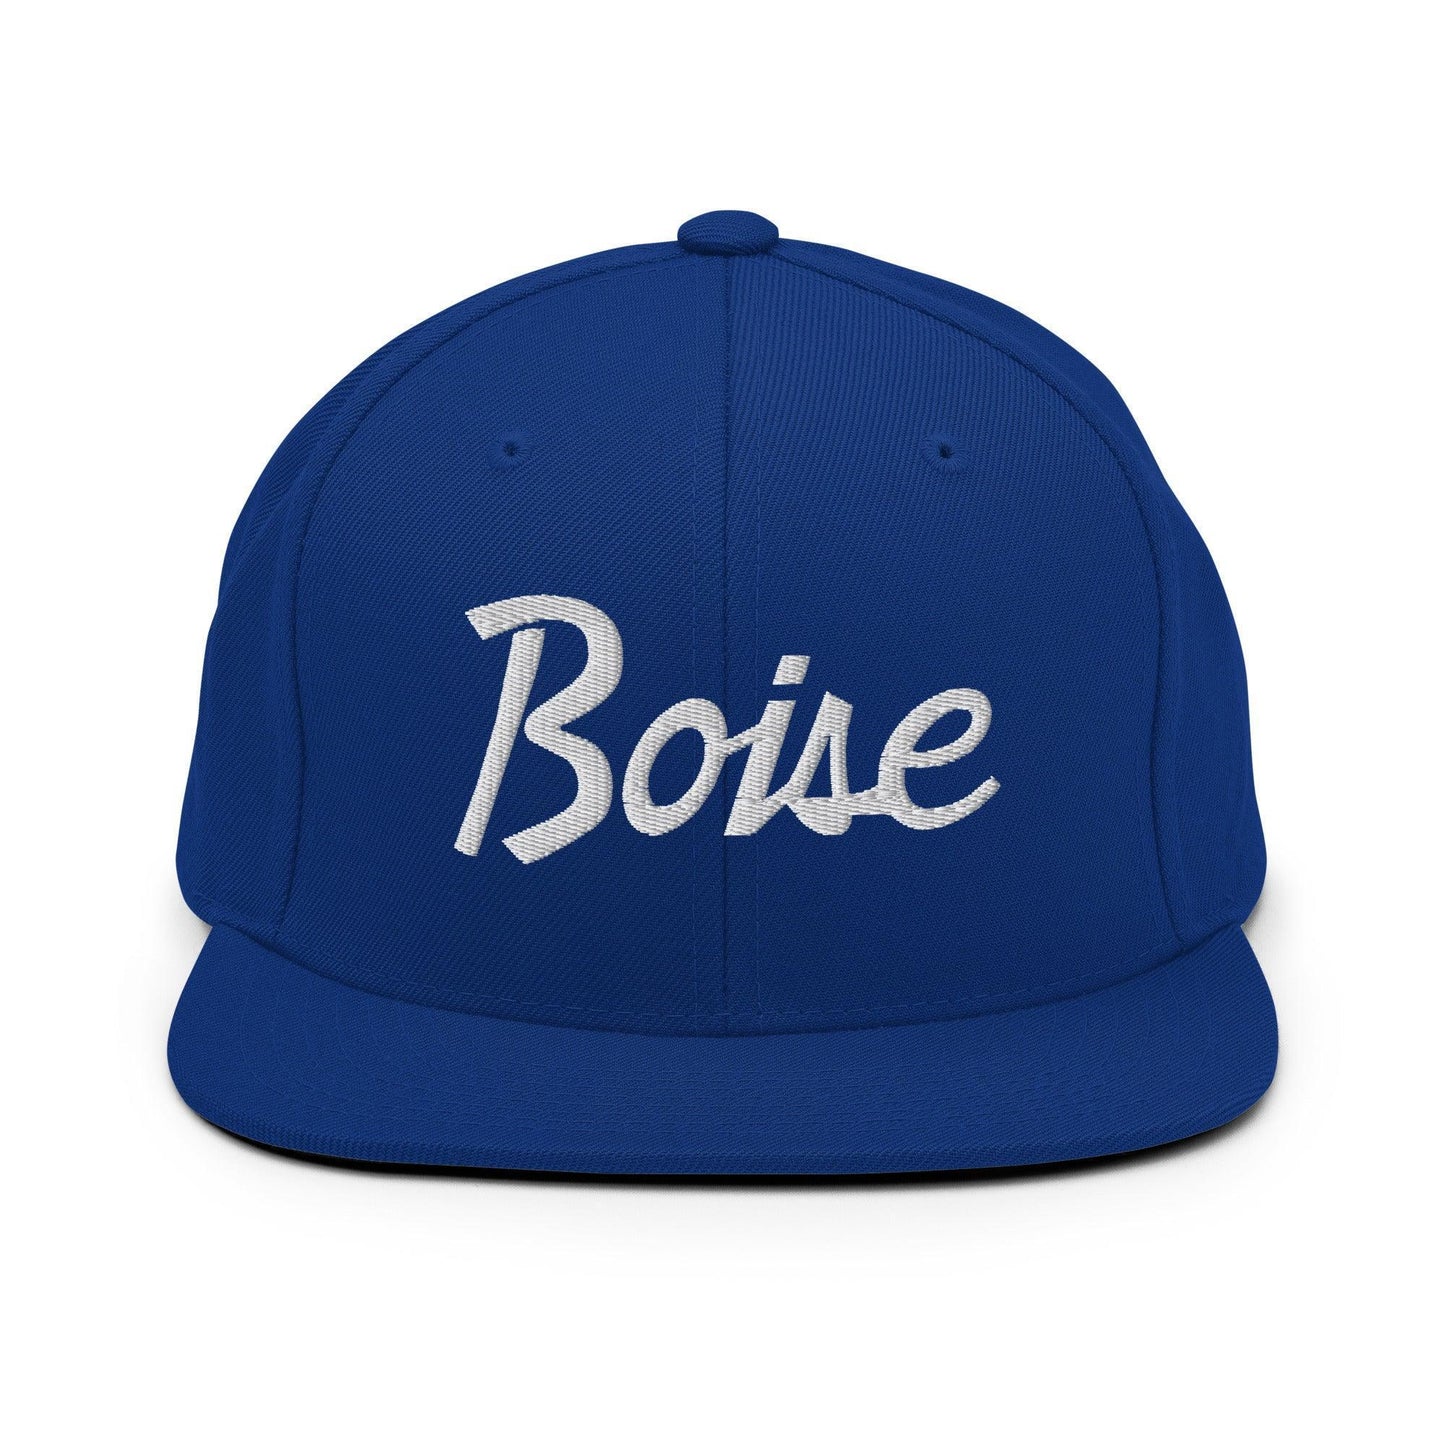 Boise Script Snapback Hat Royal Blue